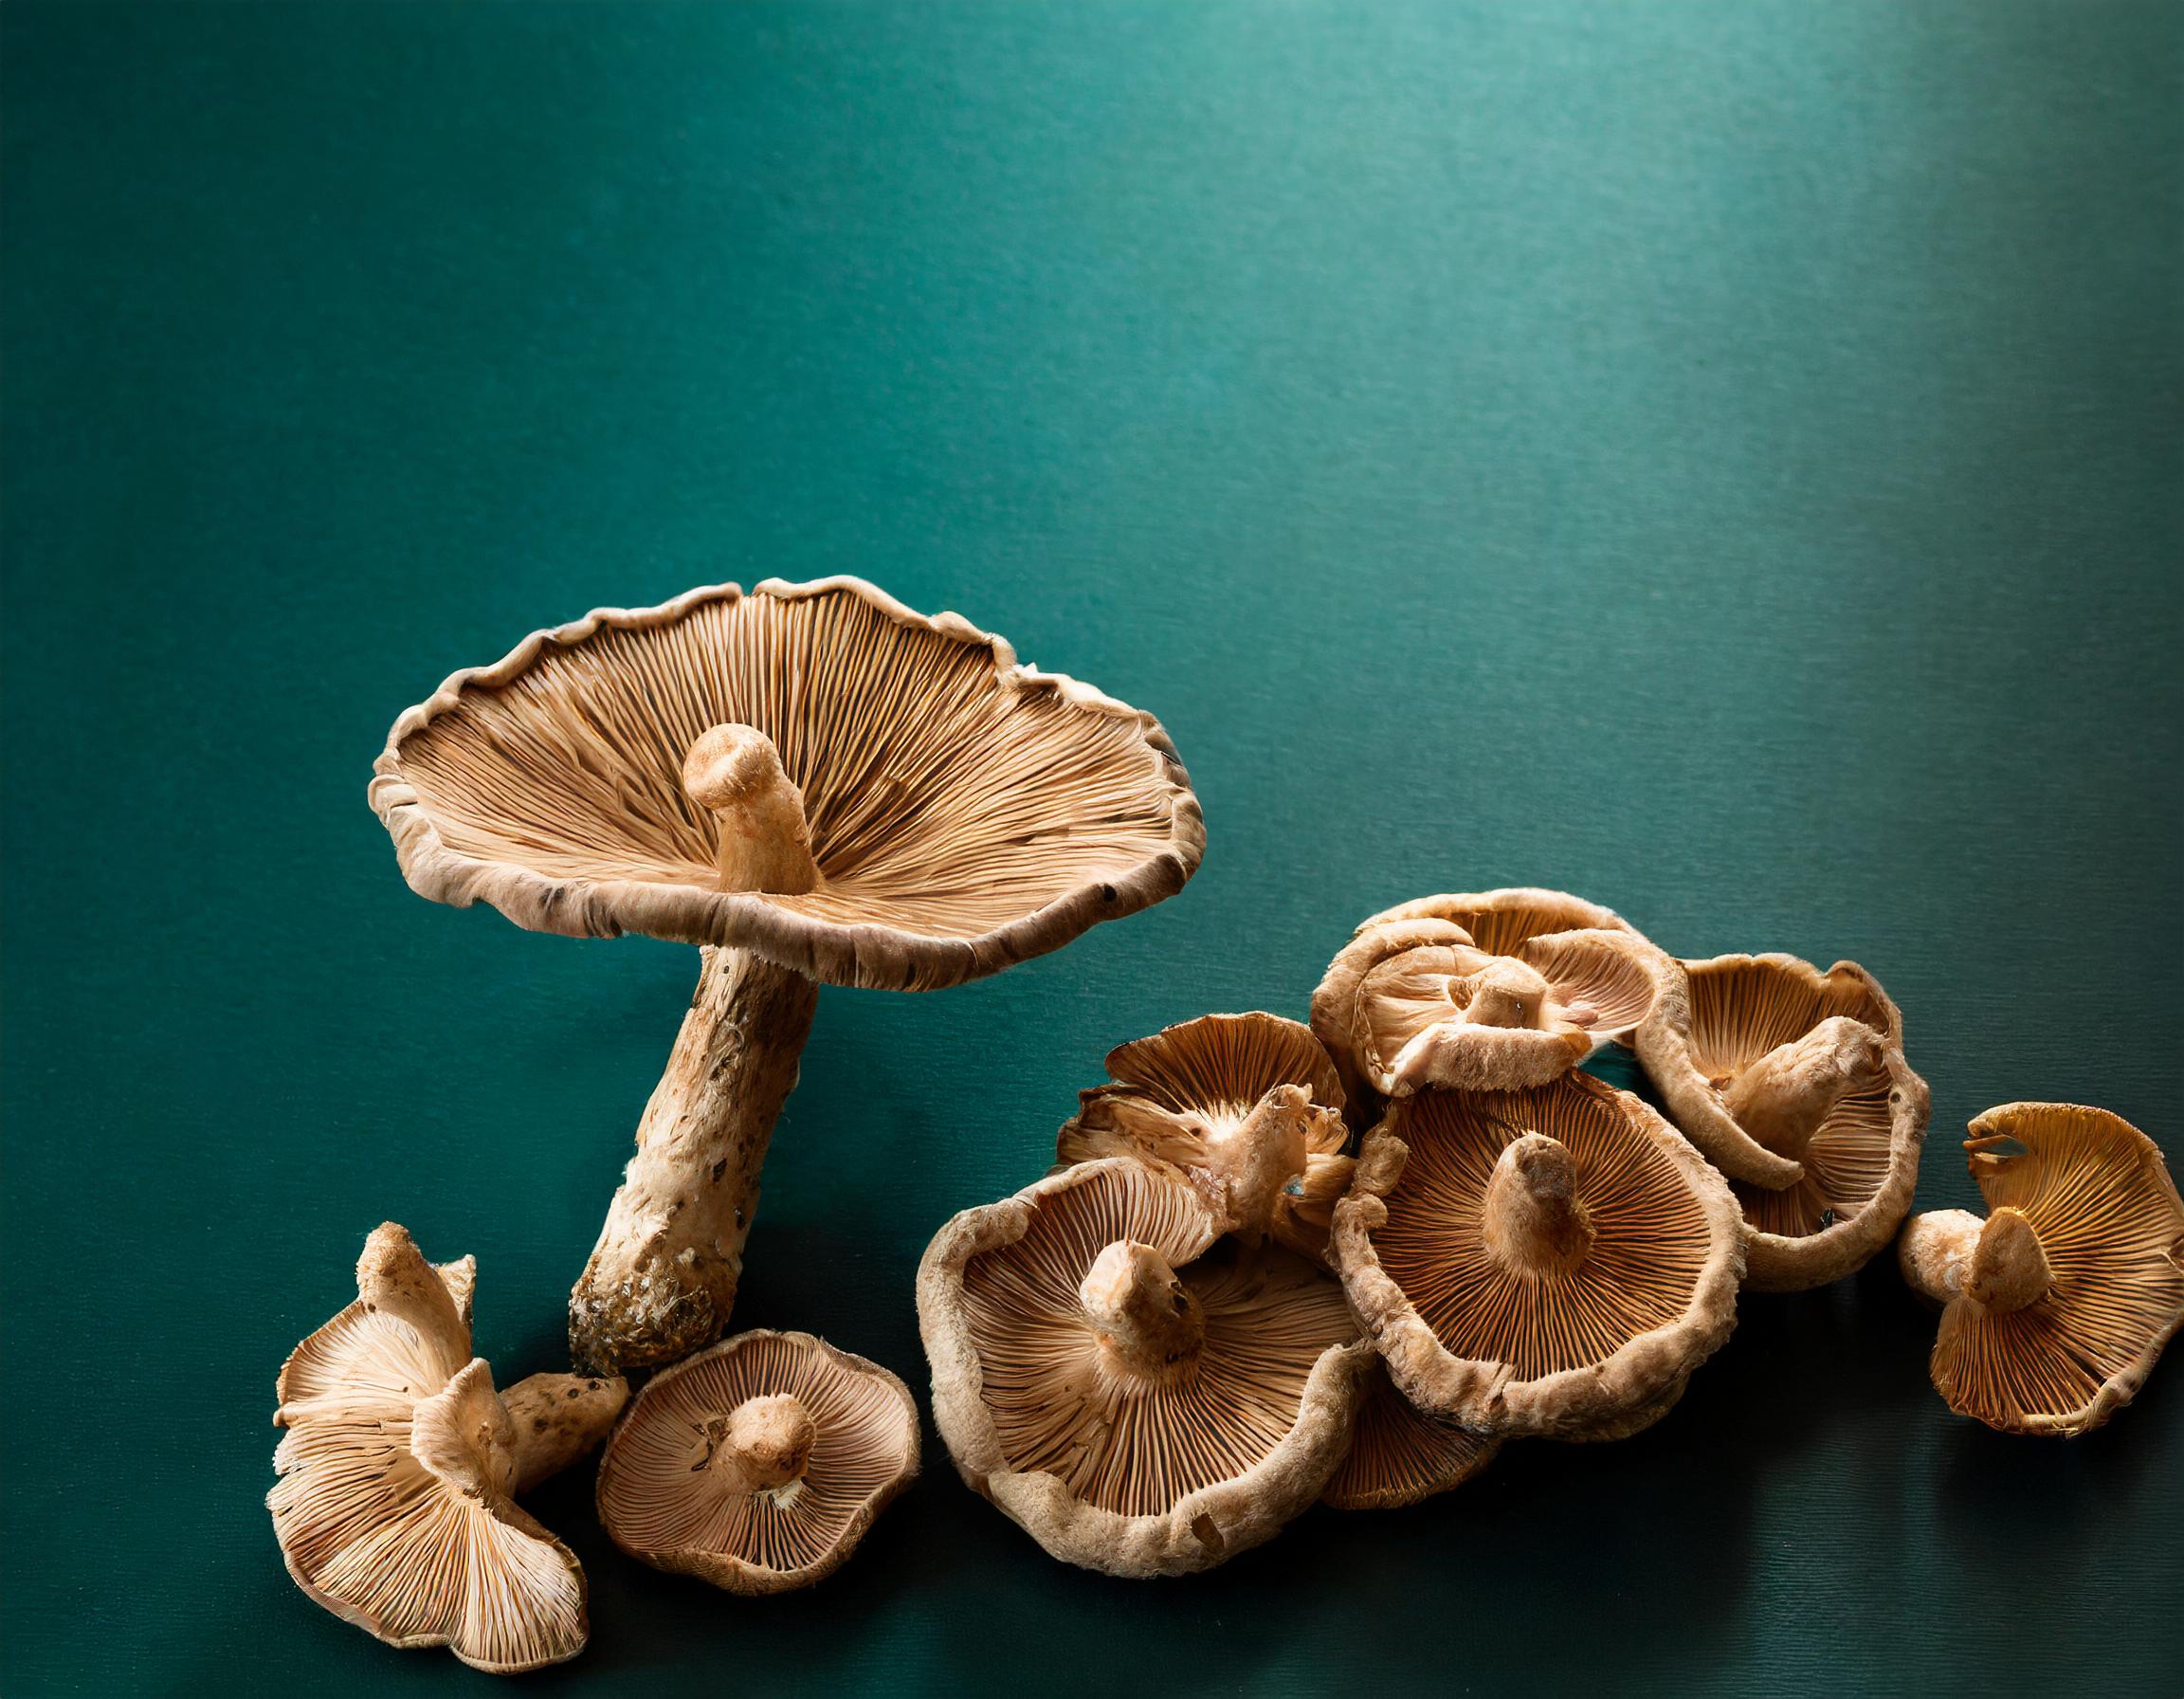 Most Potent Mushrooms